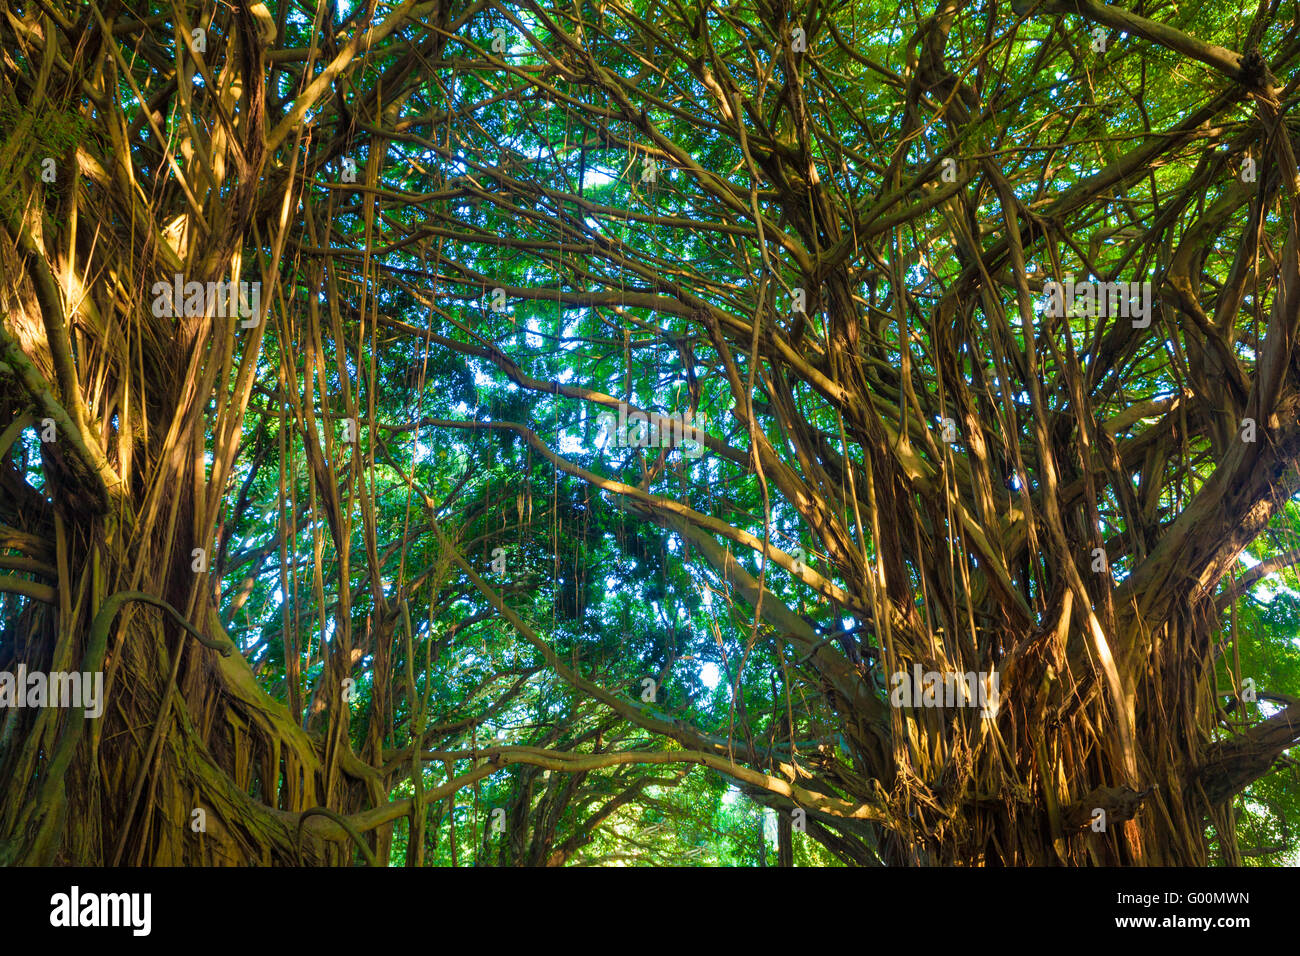 Giant banyan tree in Hawaii Stock Photo